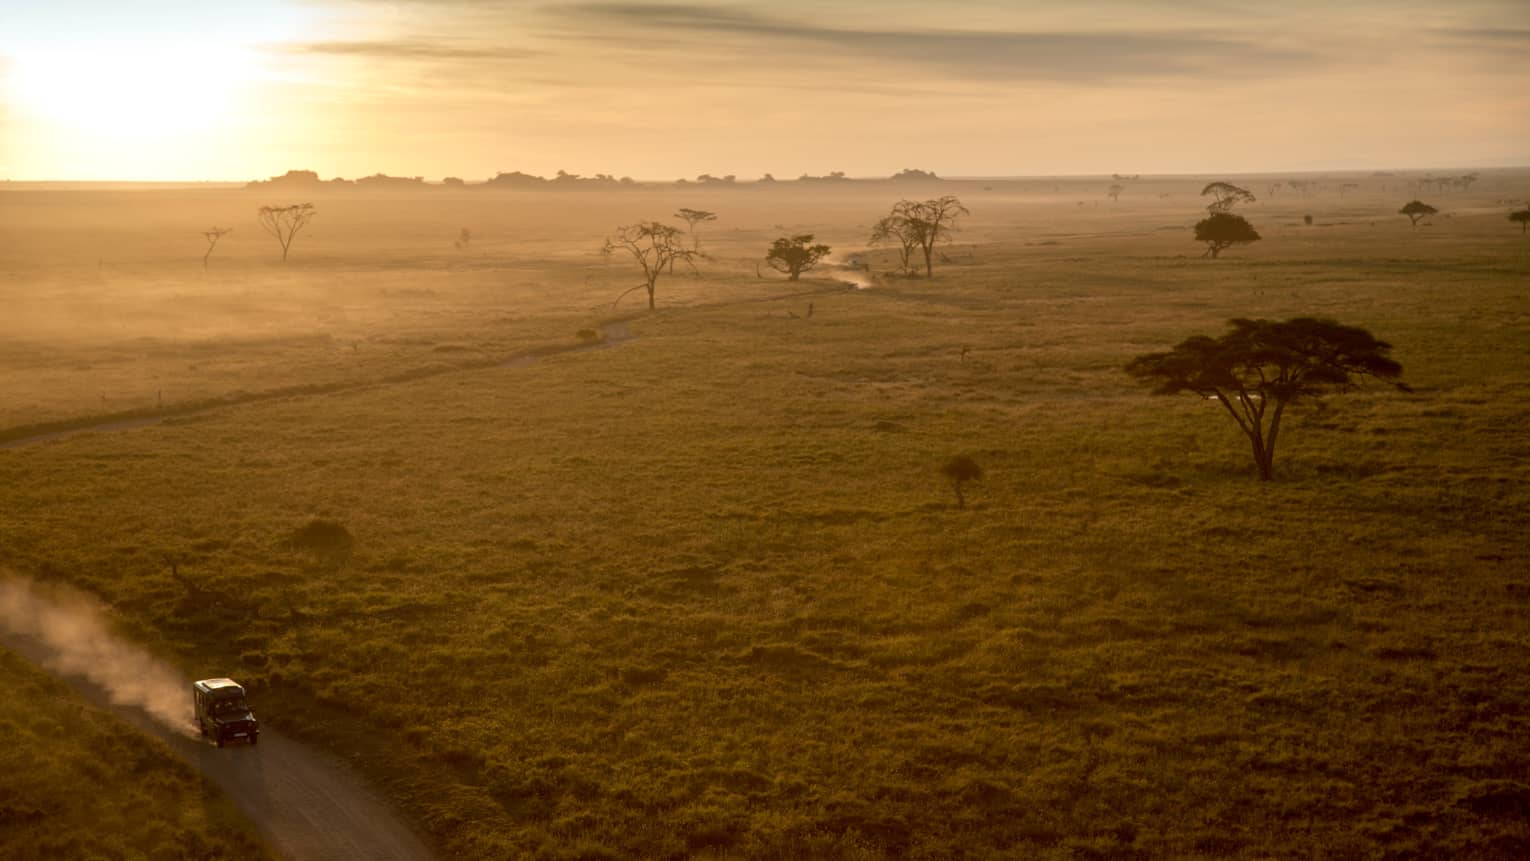 Sunset over Serengeti plains, trees